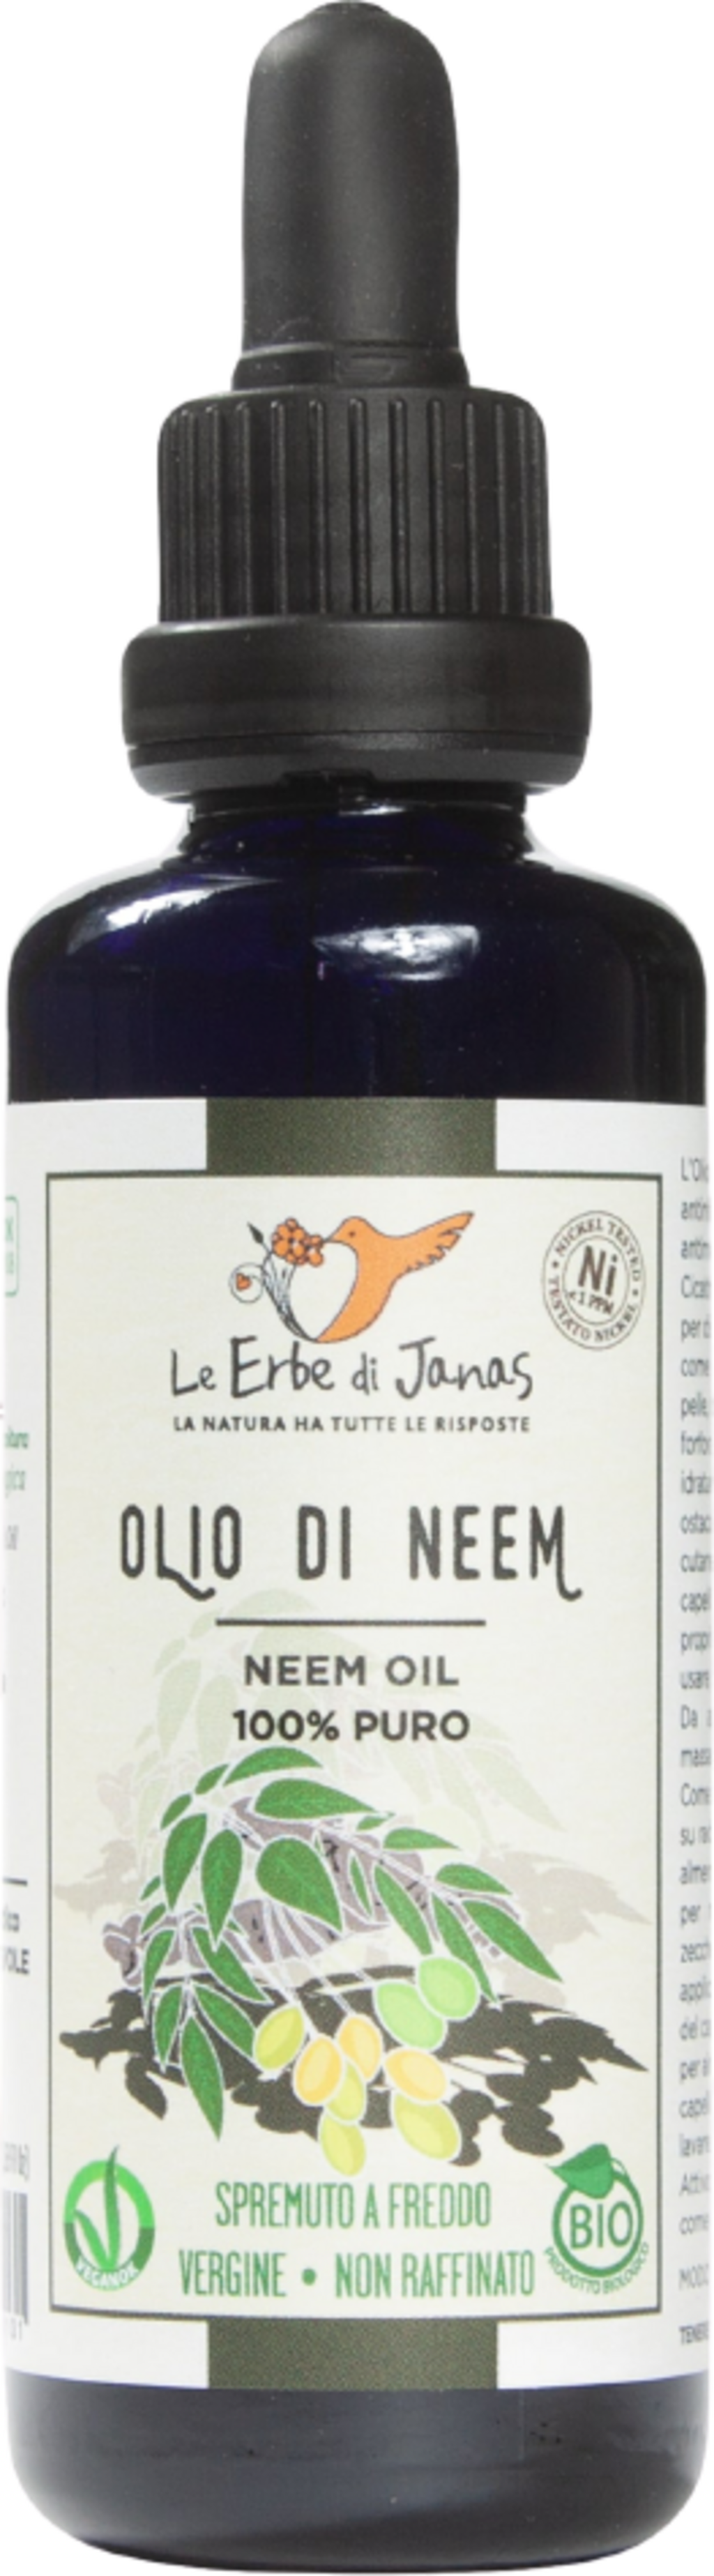 Le Erbe di Janas Neemöl - 50 ml